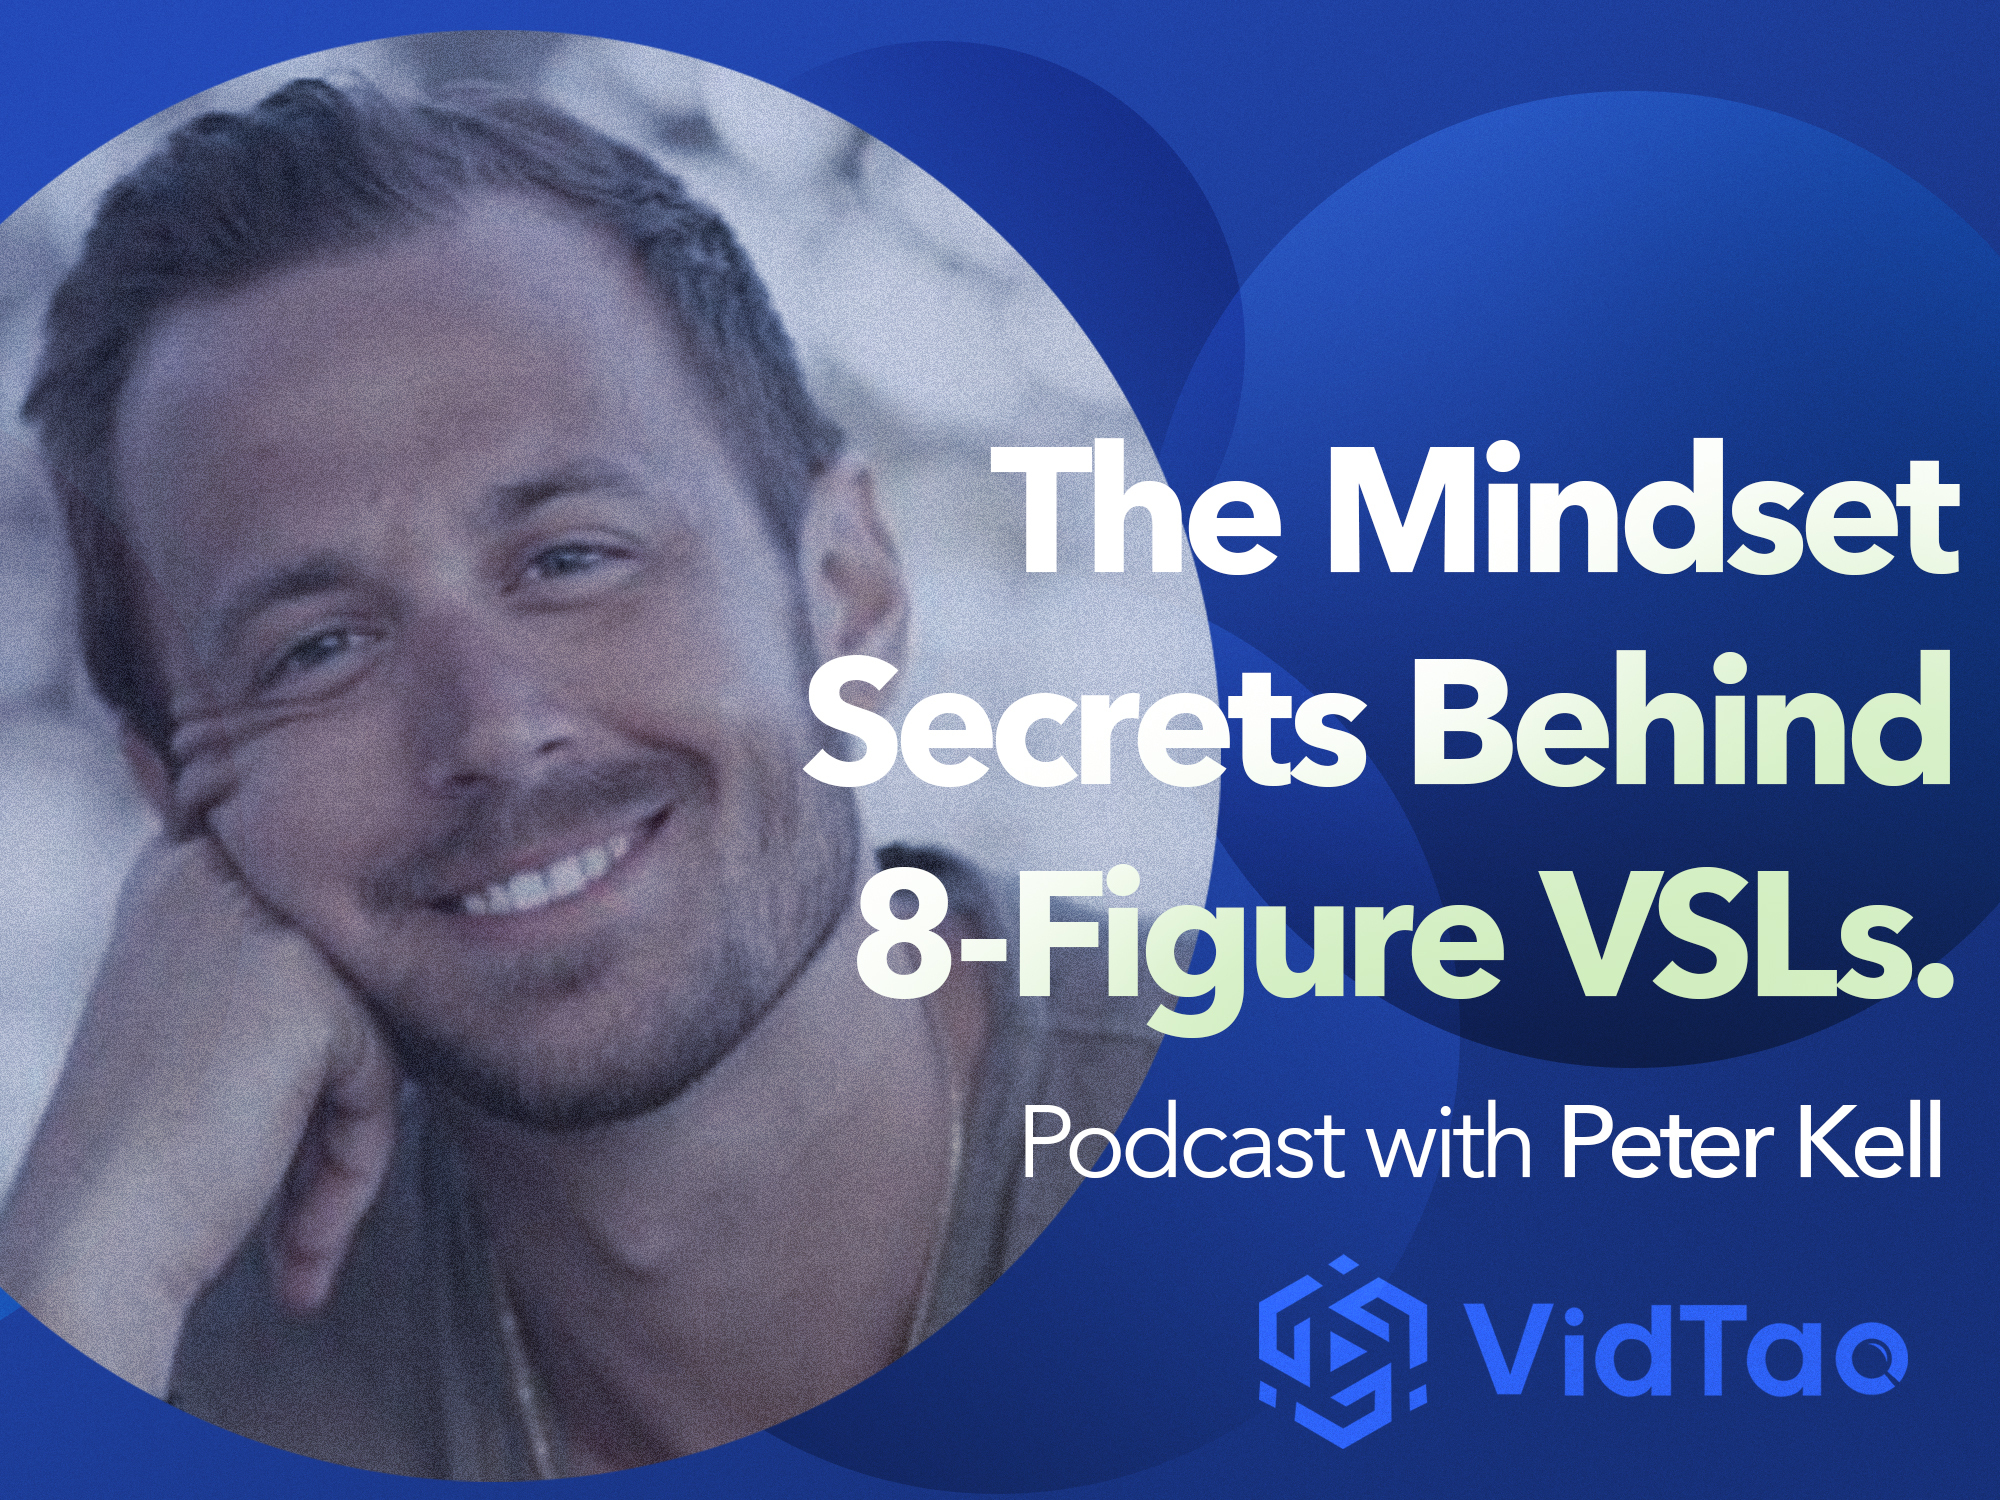 (Podcast with Peter Kell): The Mindset Secrets Behind 8-Figure VSLs